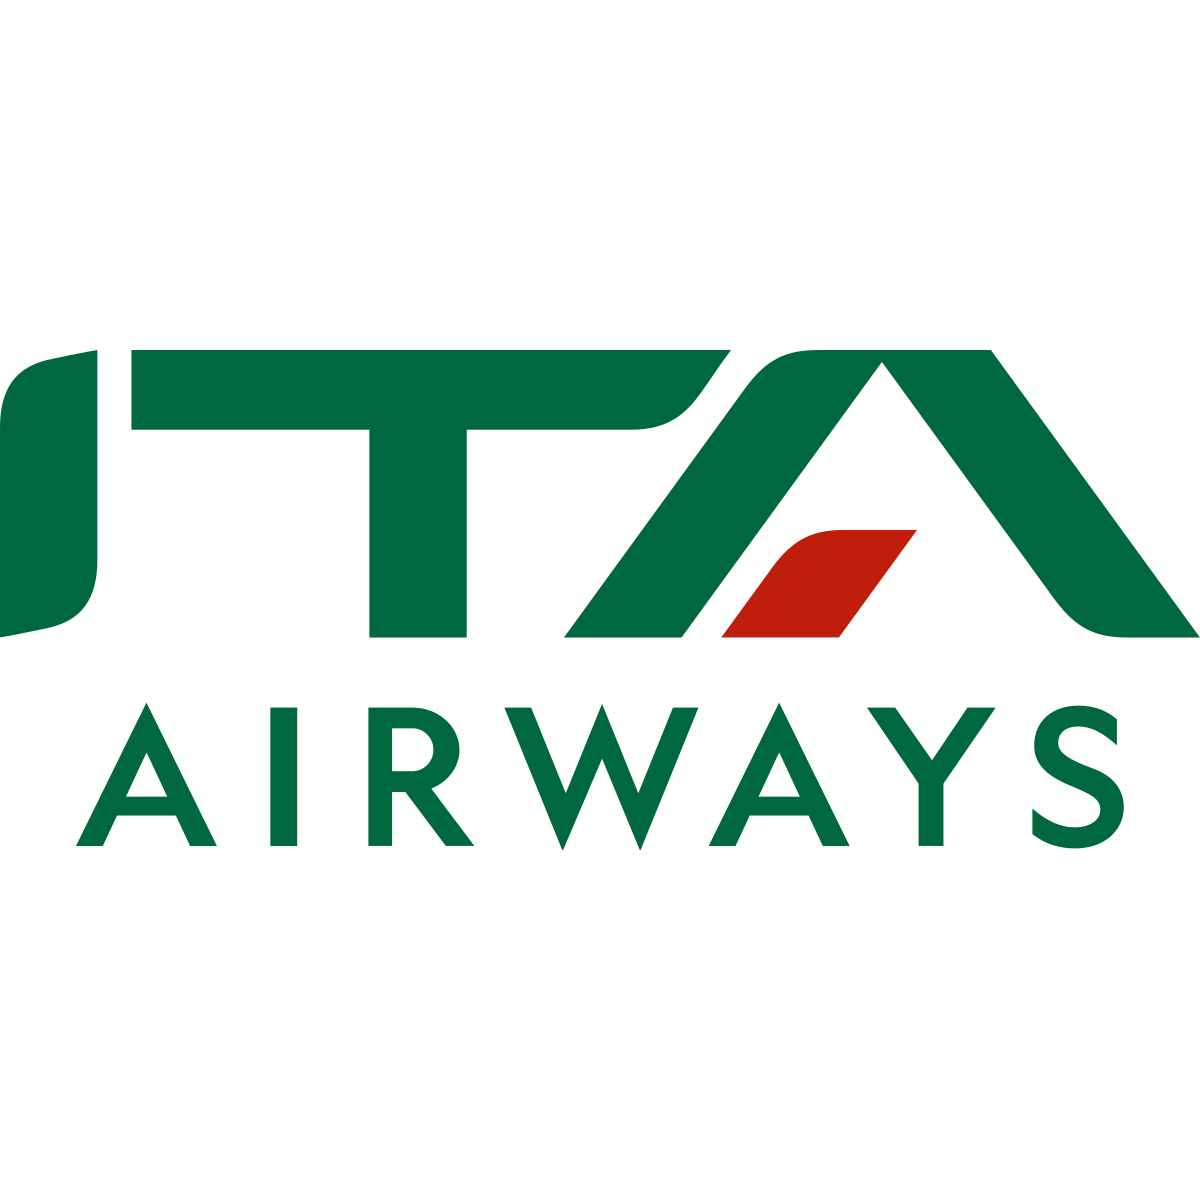 ITA Airways - Pushwoosh customer